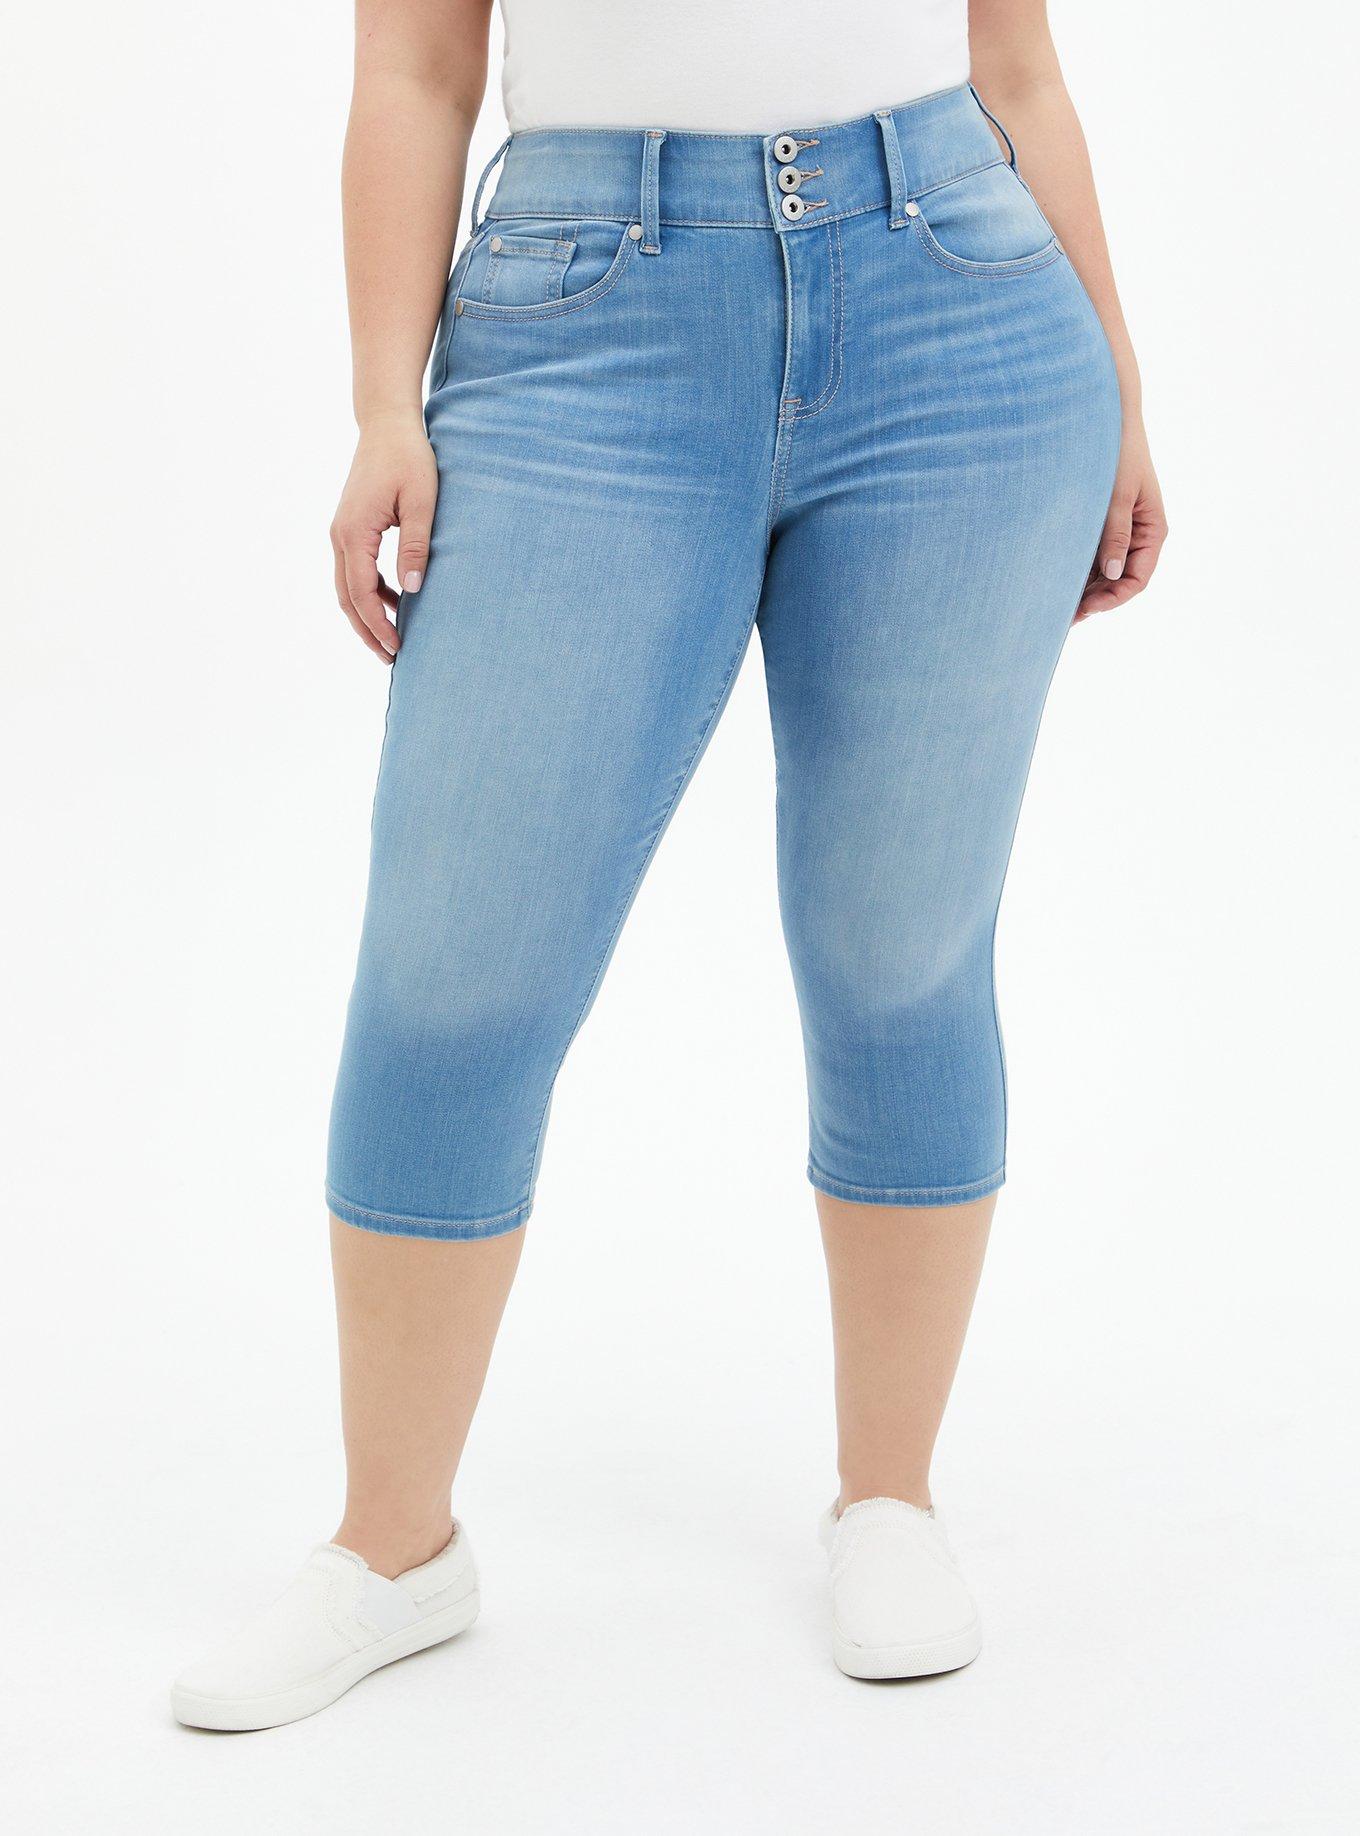 Denim Skinny Jegging*Reg-Plus Size* Super Stretchy Capris Cropped Jeans  Pants